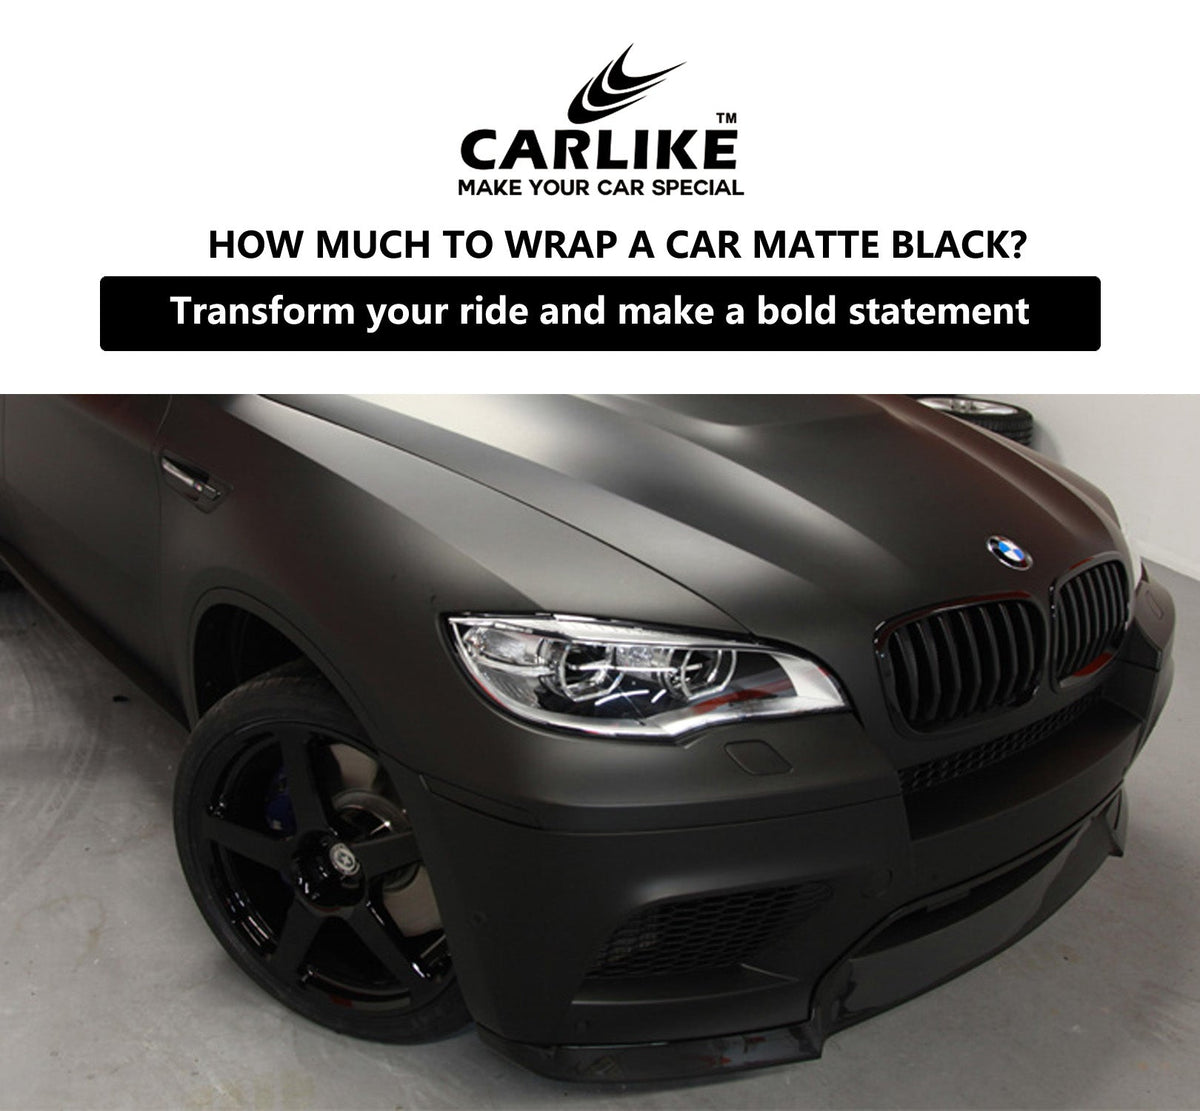 Matte Black Car Wraps - What's Next?